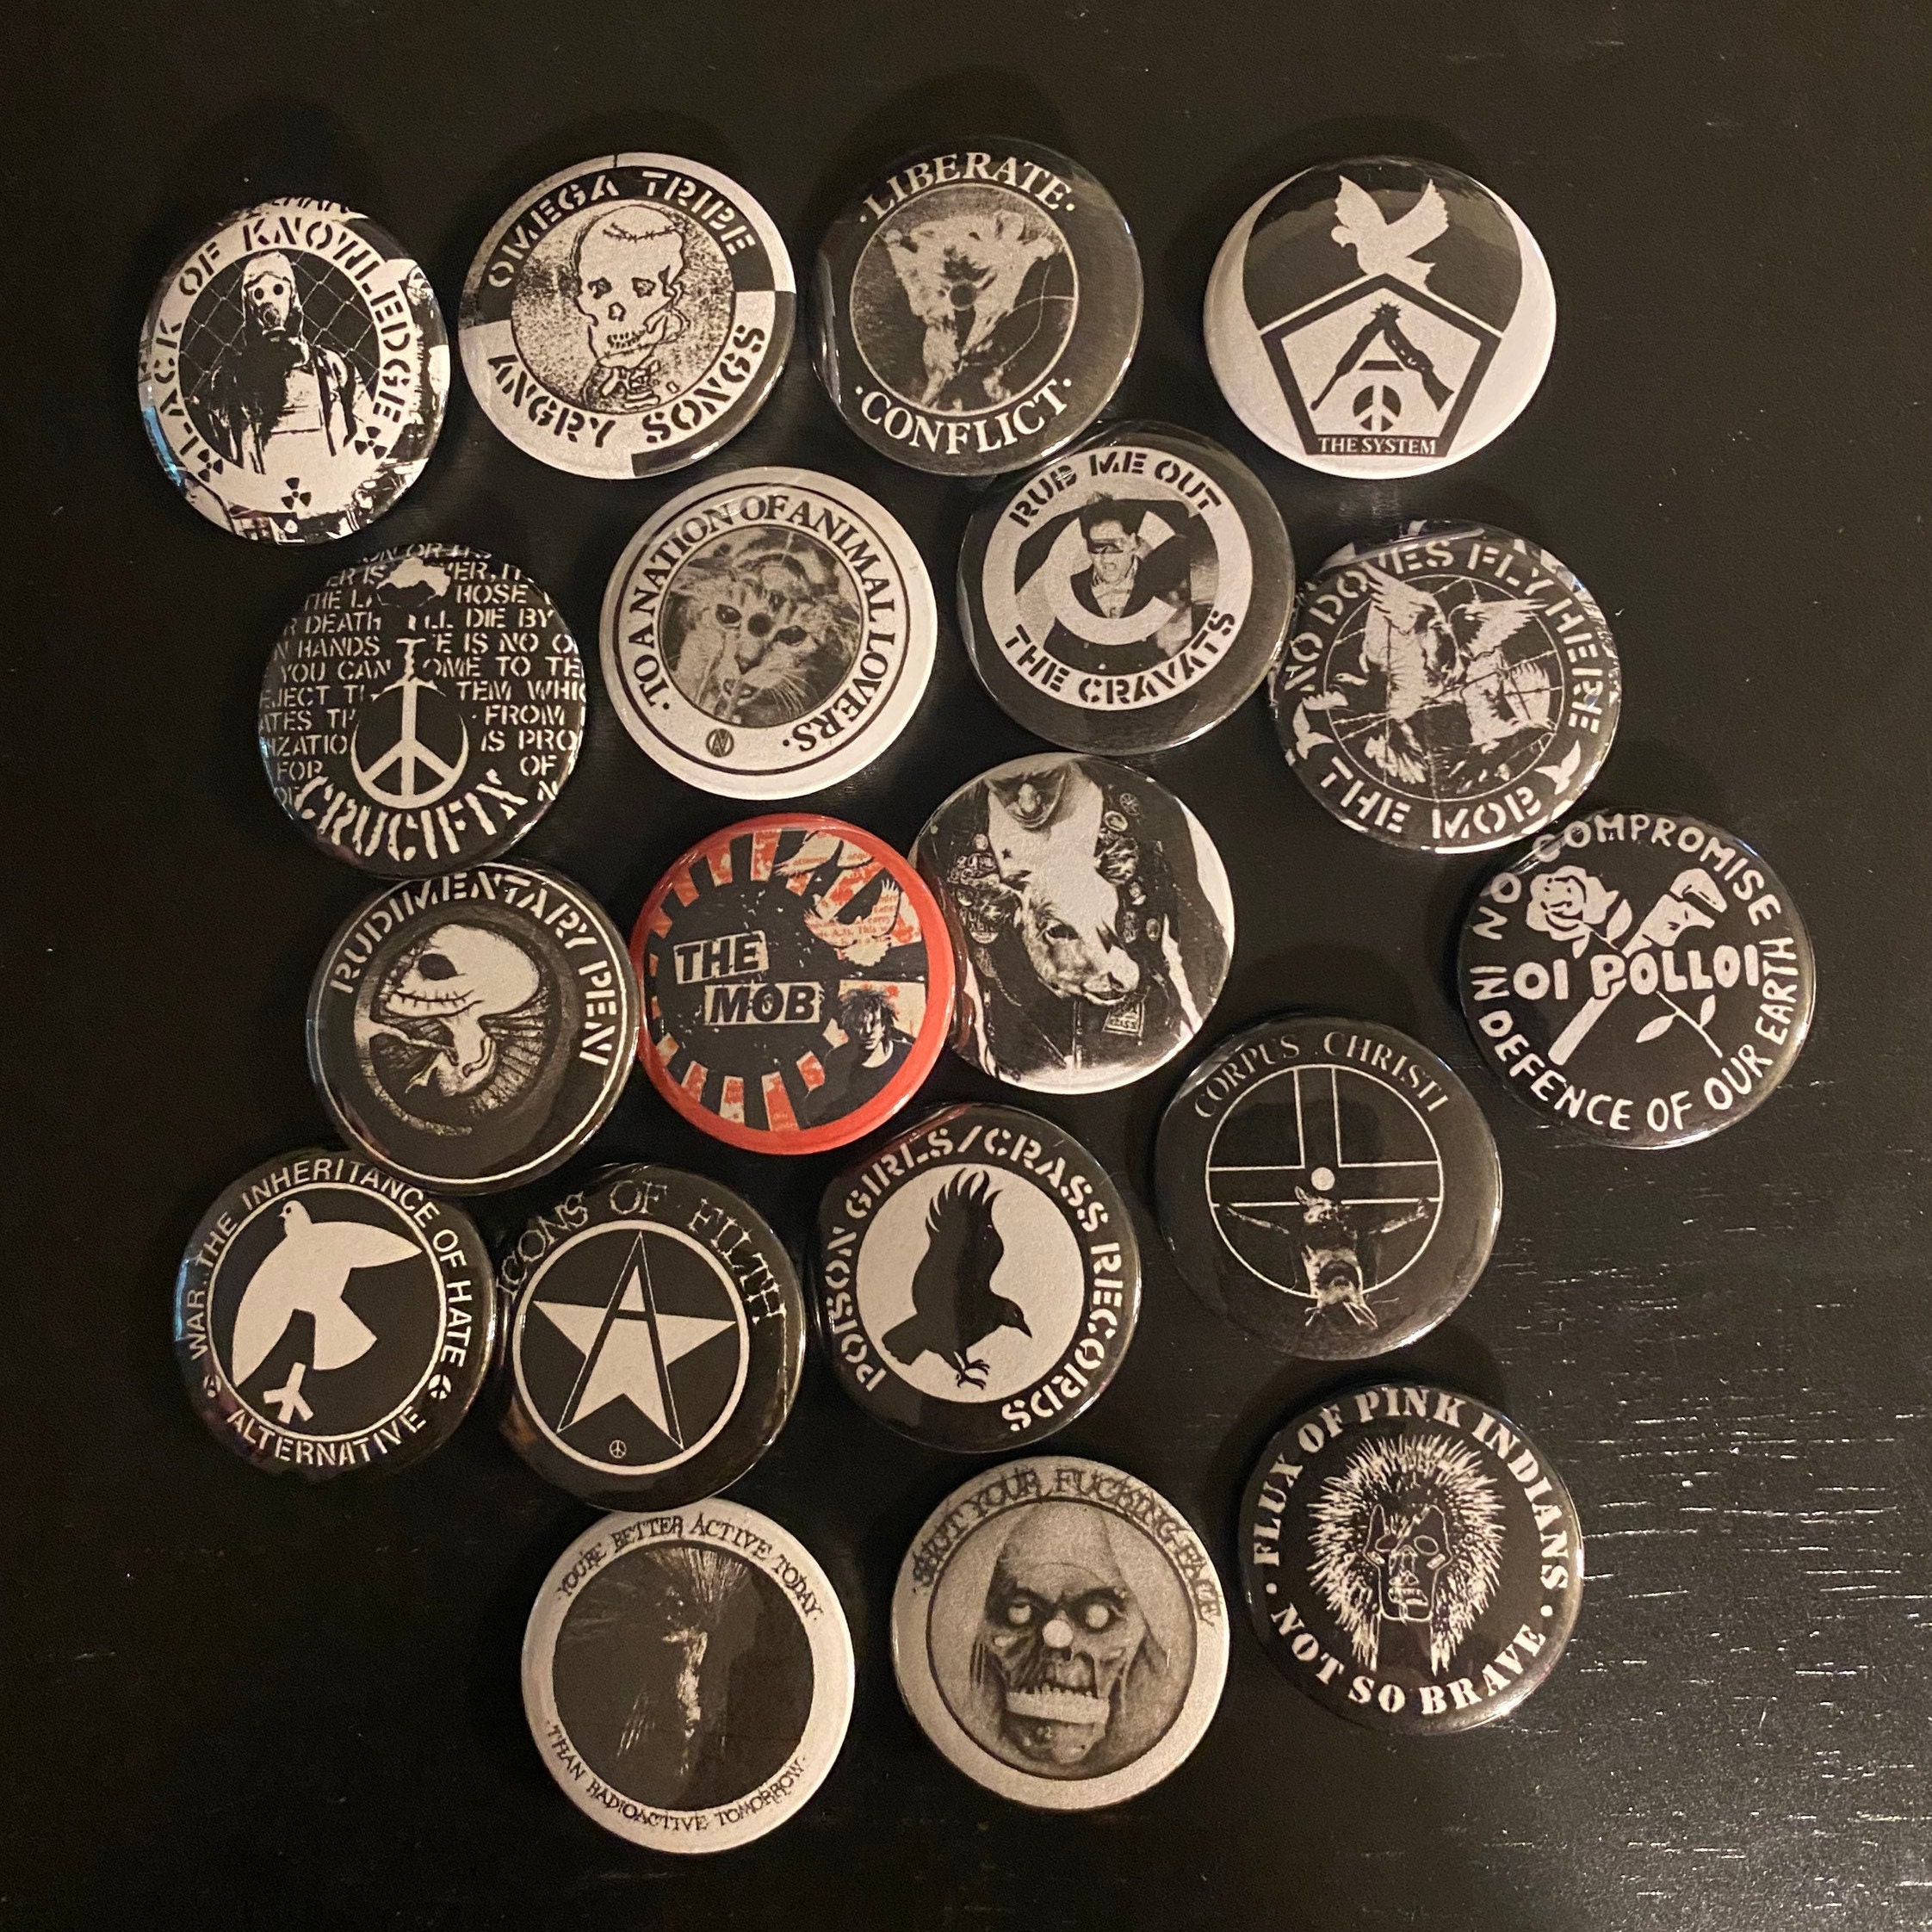 Punk Rock Hardcore (A) Pins Buttons (1.25 inch / 32mm)